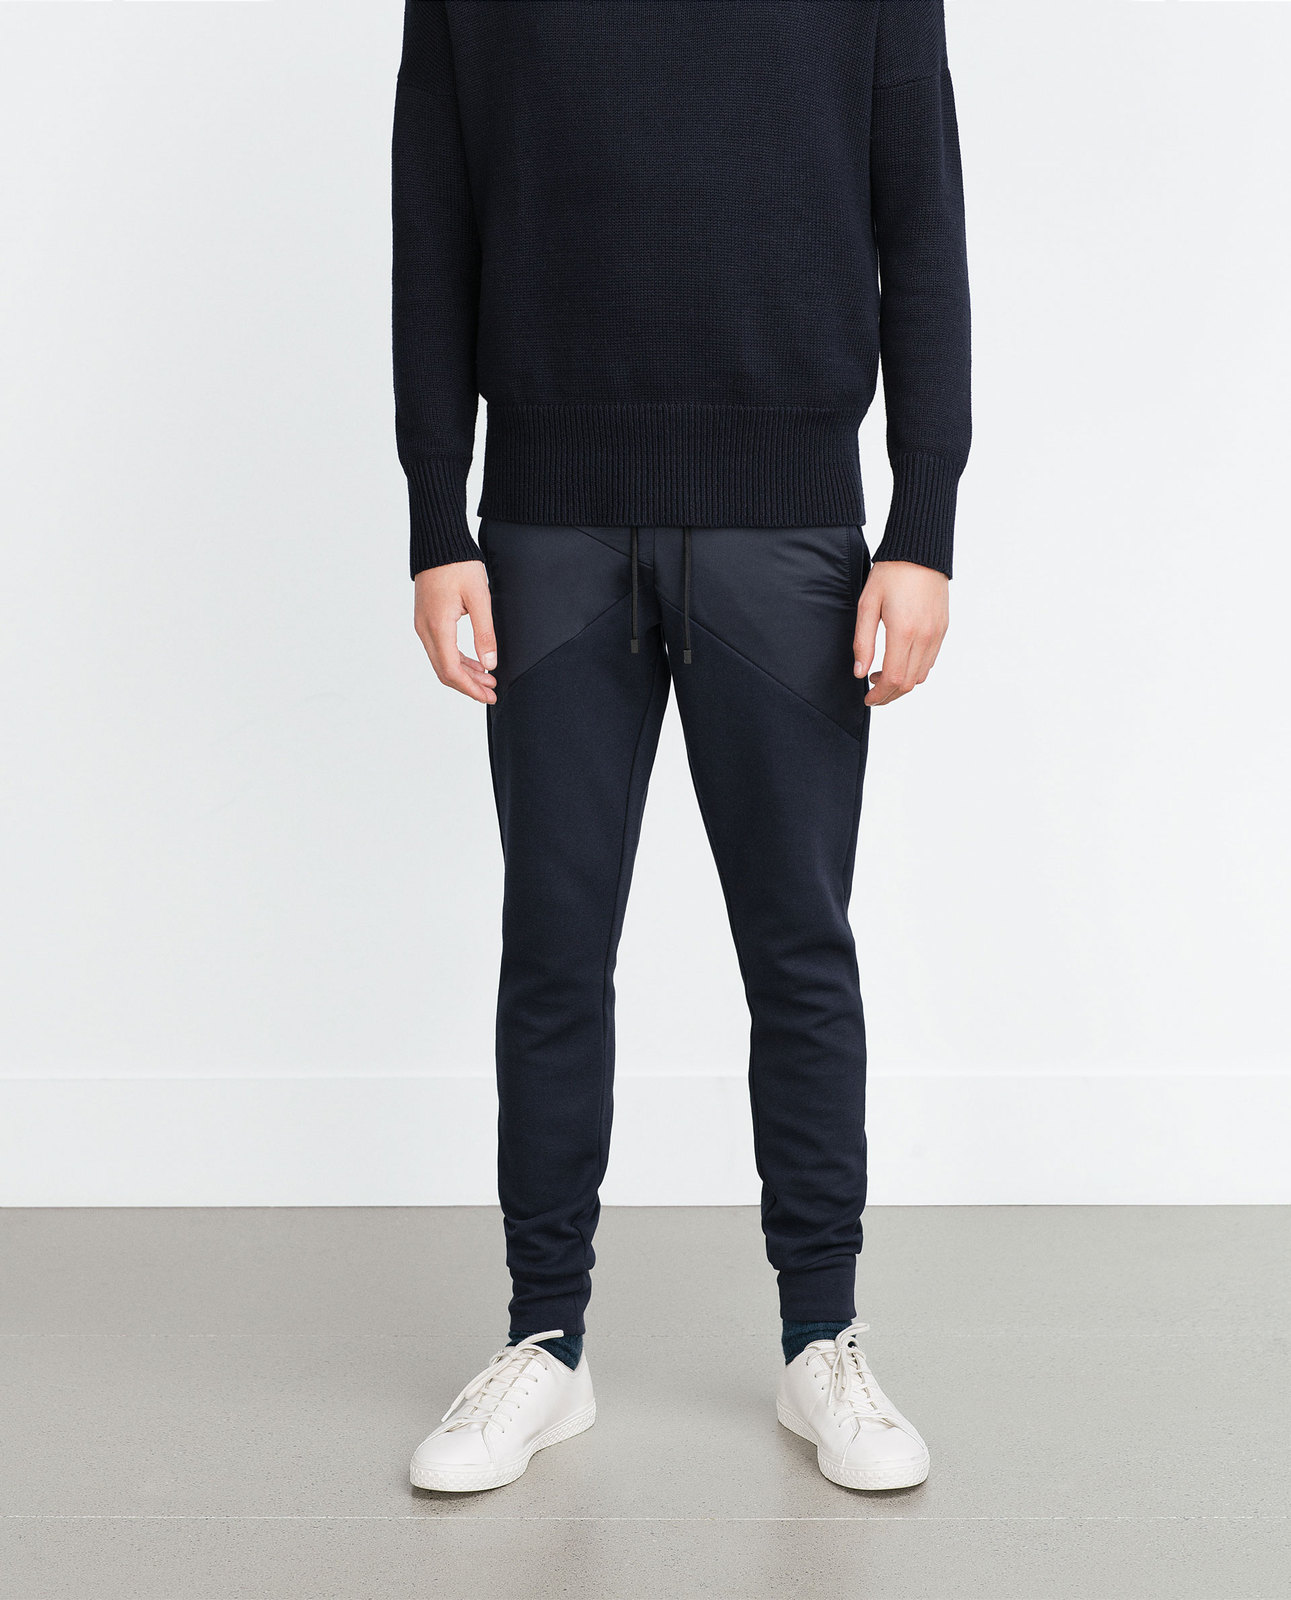 Zara férfi fekete melegítő nadrág 2015 fotója